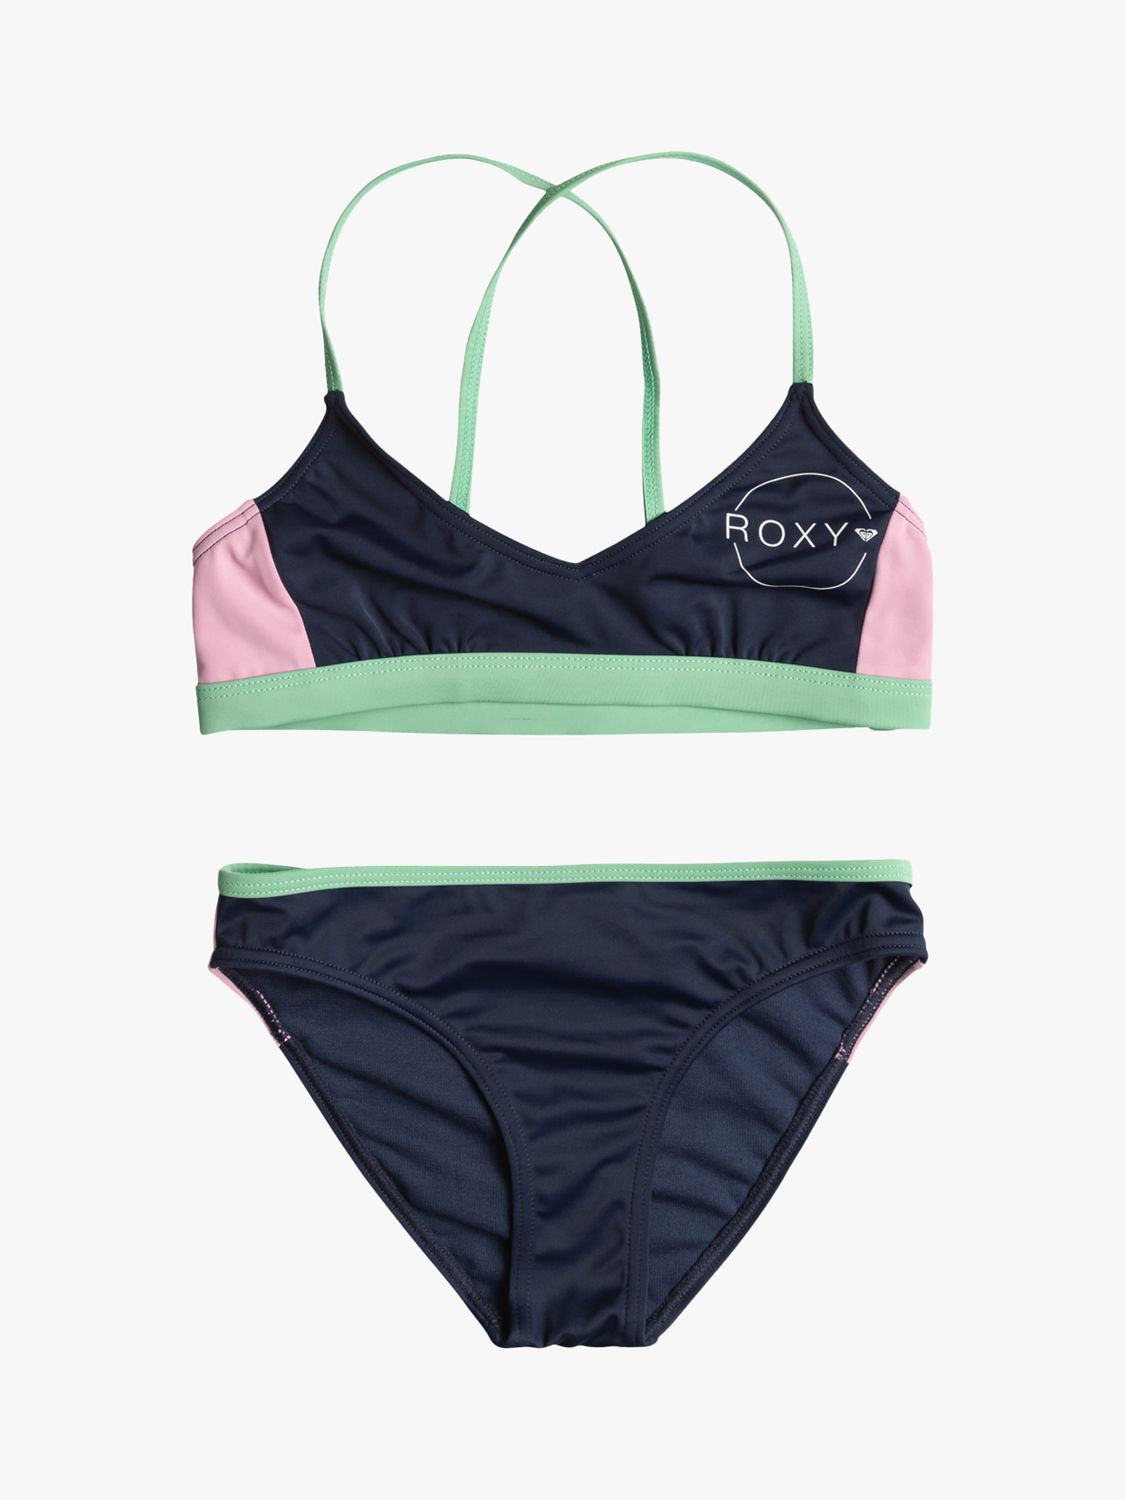 Roxy Kids' Ilacabo Collection Athletic Two-Piece Bikini Set, Naval Academy, 16 years